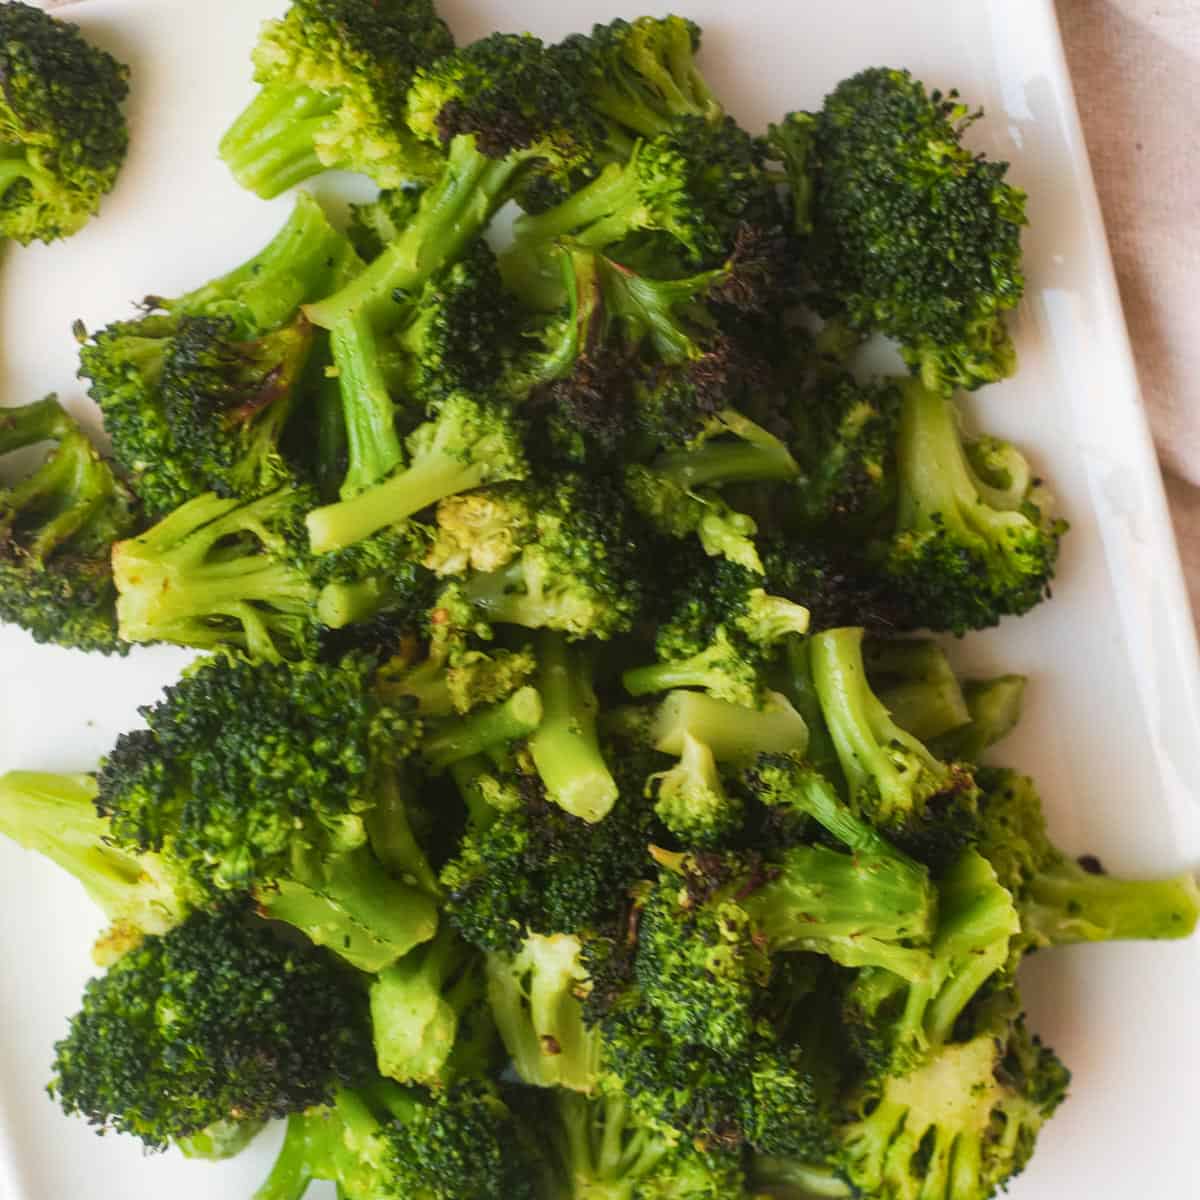 Roasted broccoli florets on a white plate.